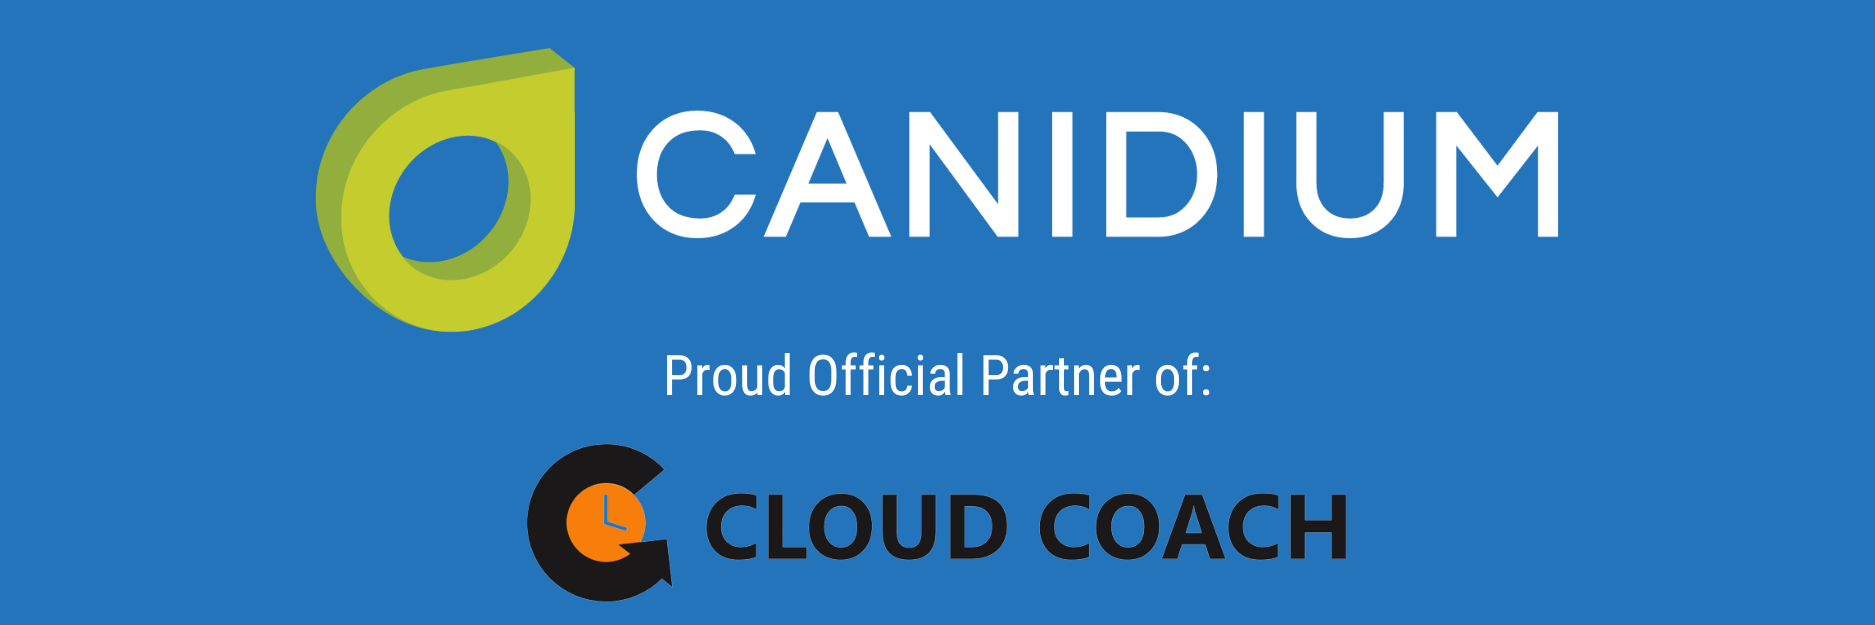 Canidium is now an Official Cloud Coach Implementation Partner